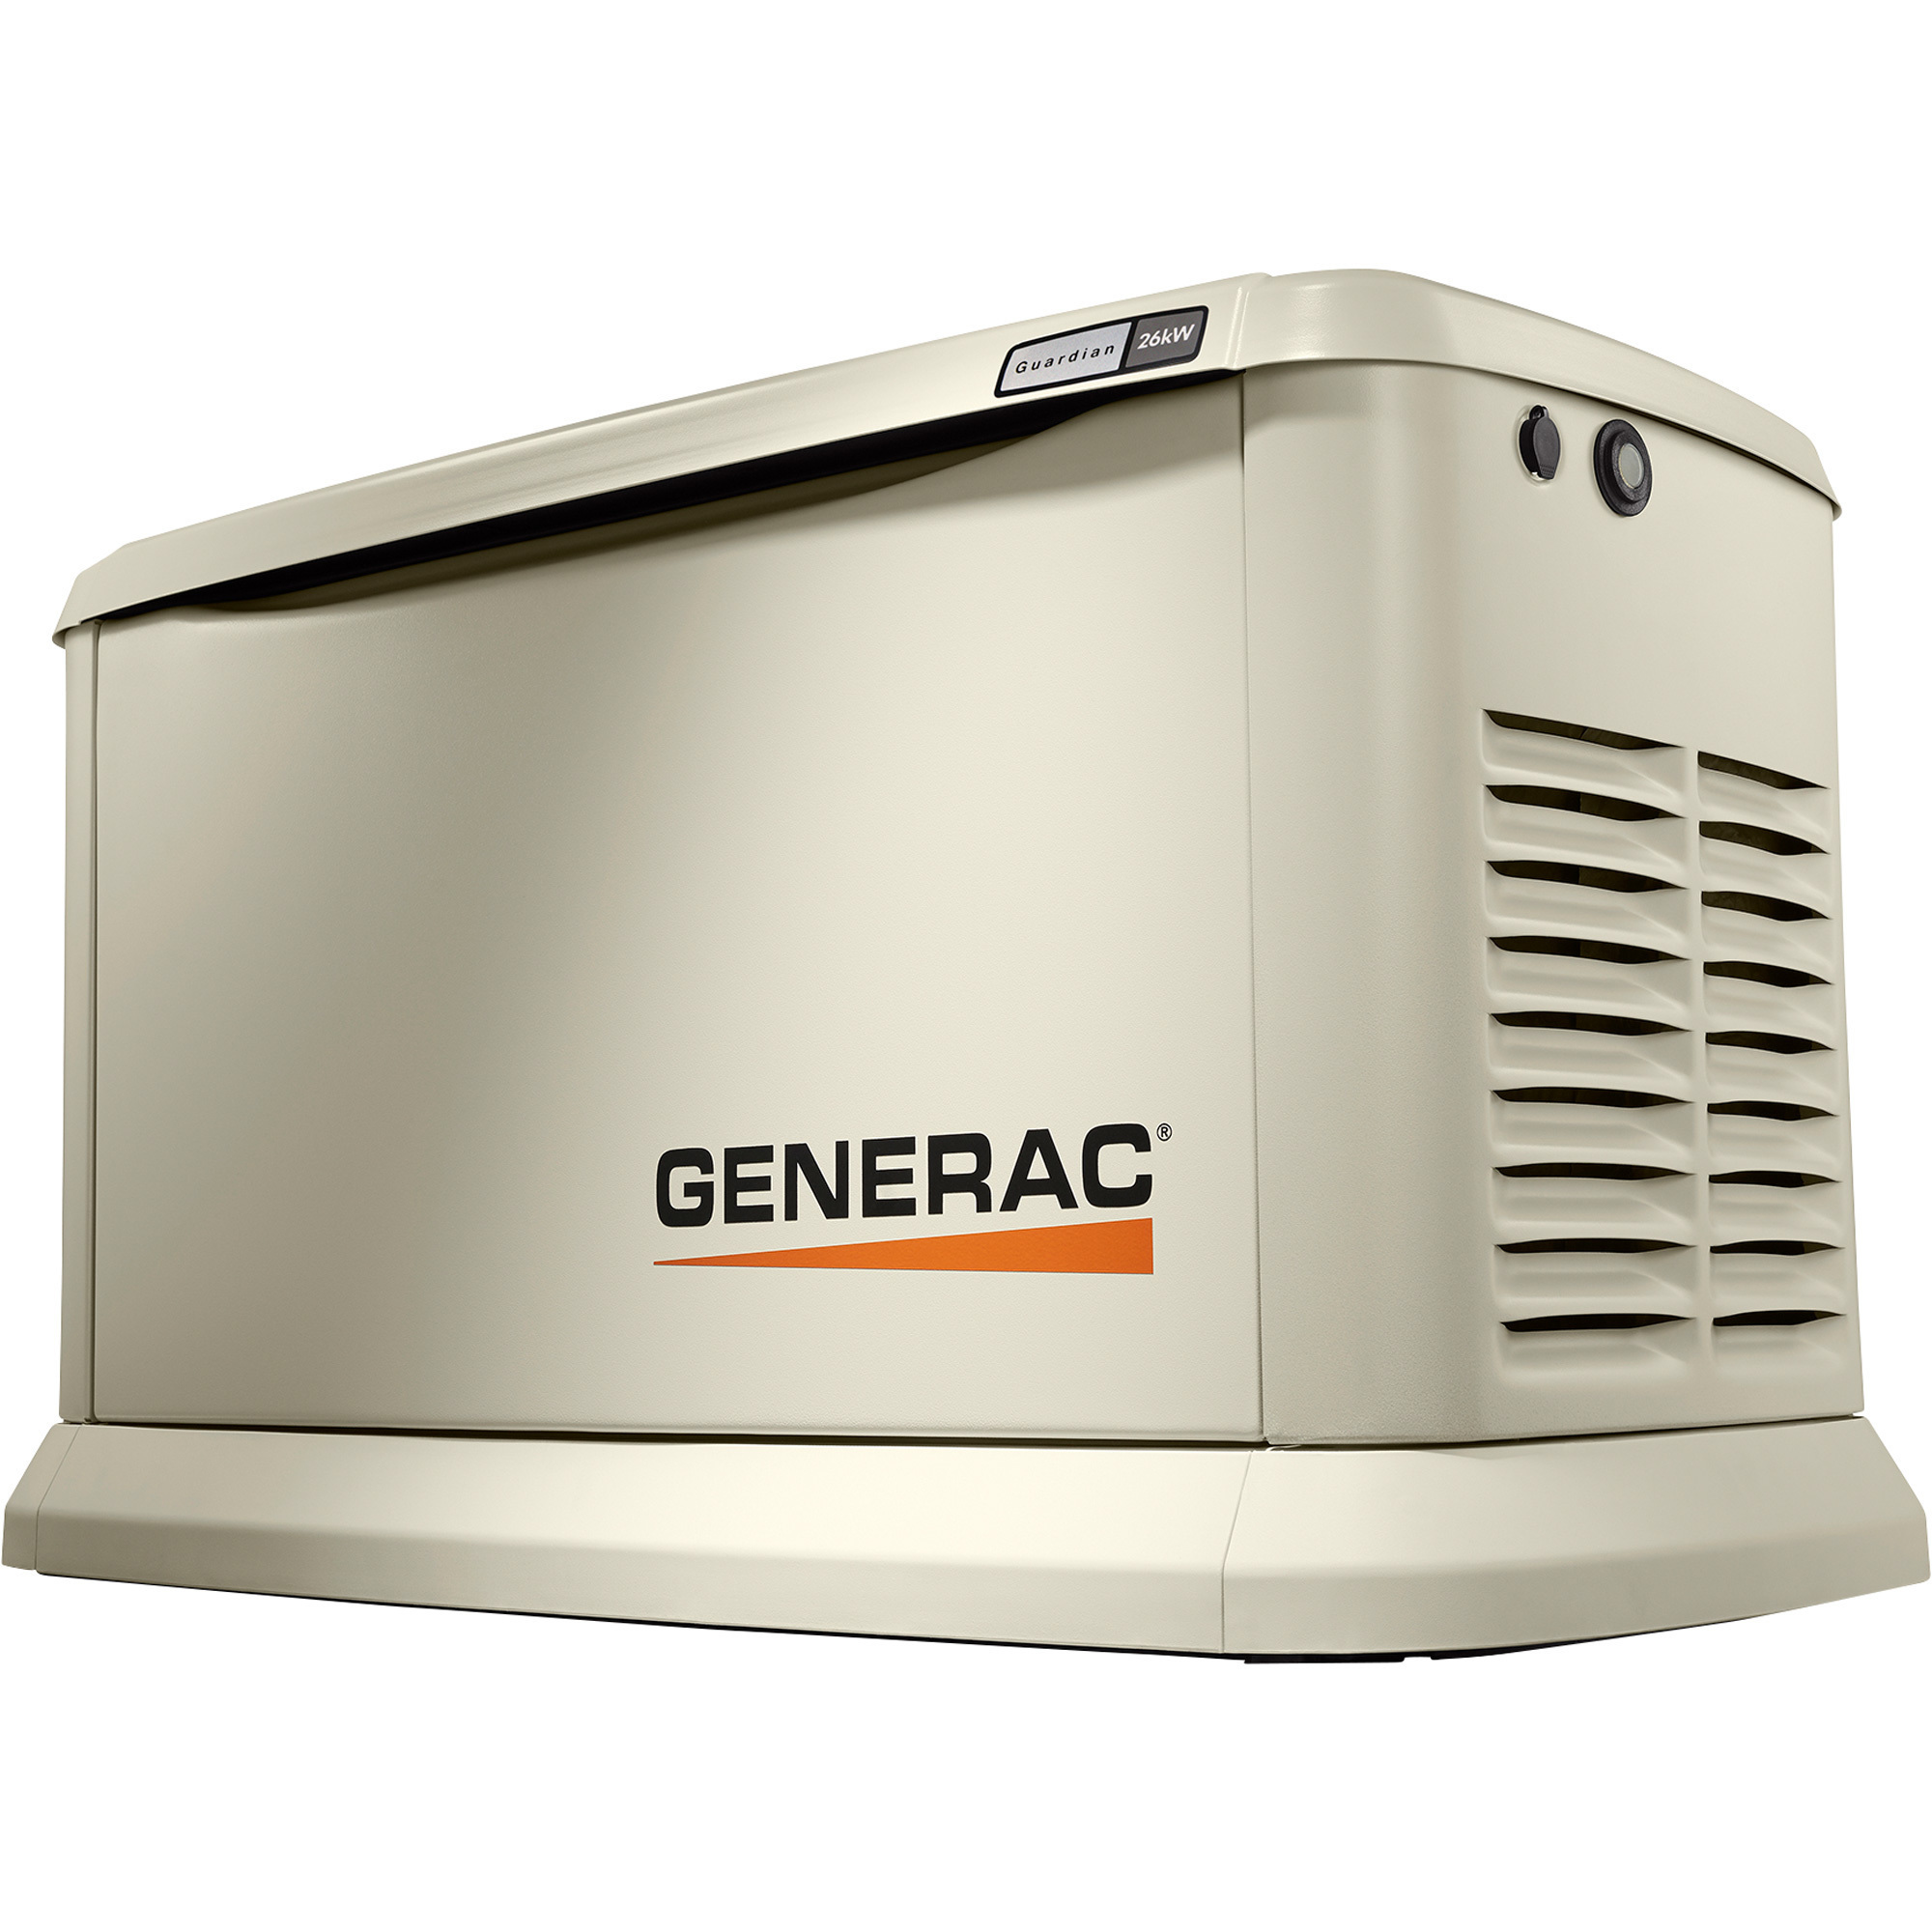 Generac Guardian Series Home Standby Generator, 26kW (LP)/22.5kW (NG), Aluminum Enclosure, Model 7290